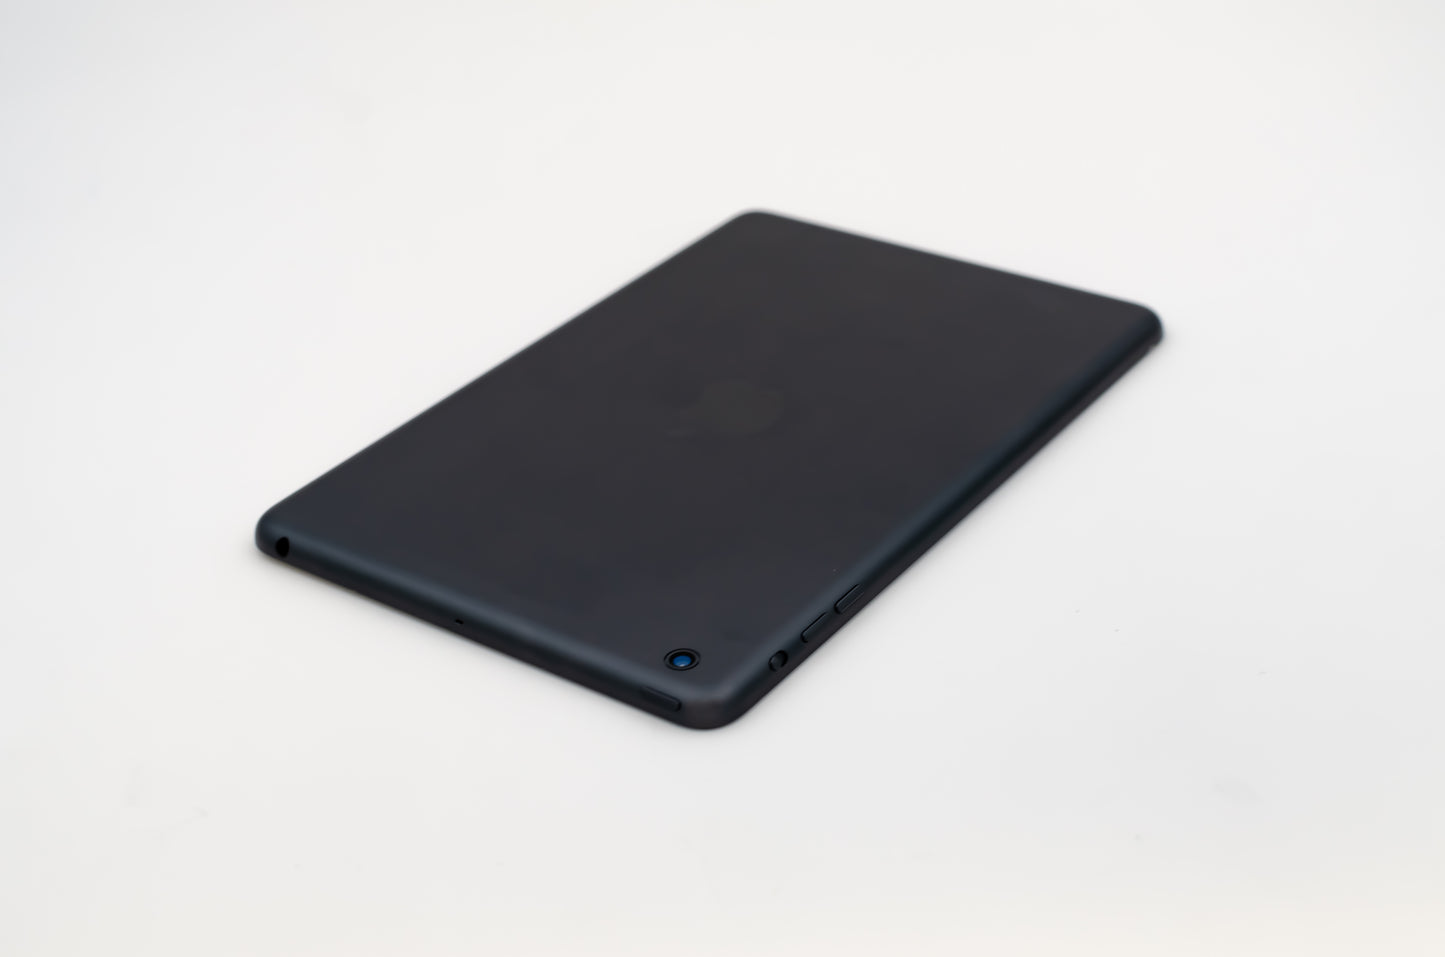 apple-2012-7.9-inch-ipad-mini-1-a1432-slate/black-5